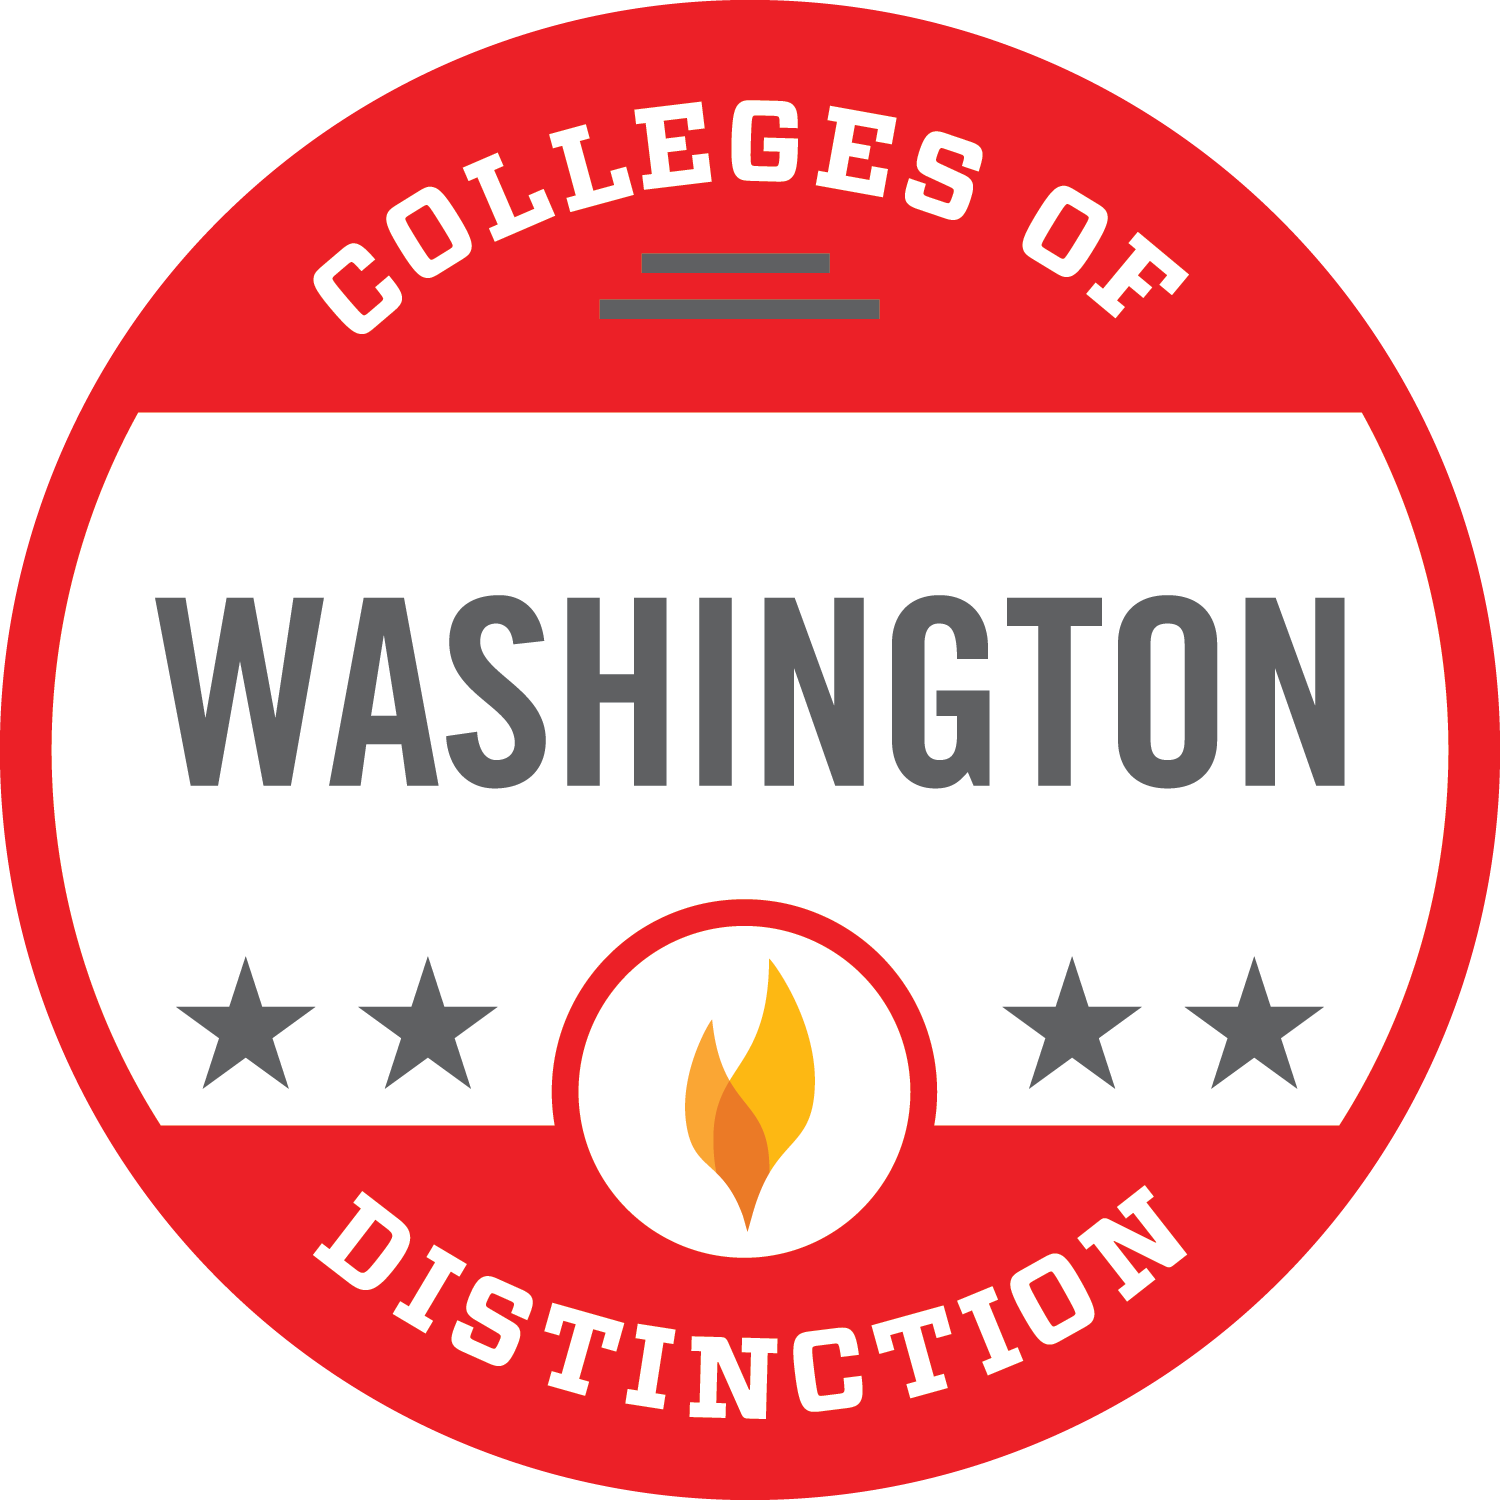 College of Distinction - Washington